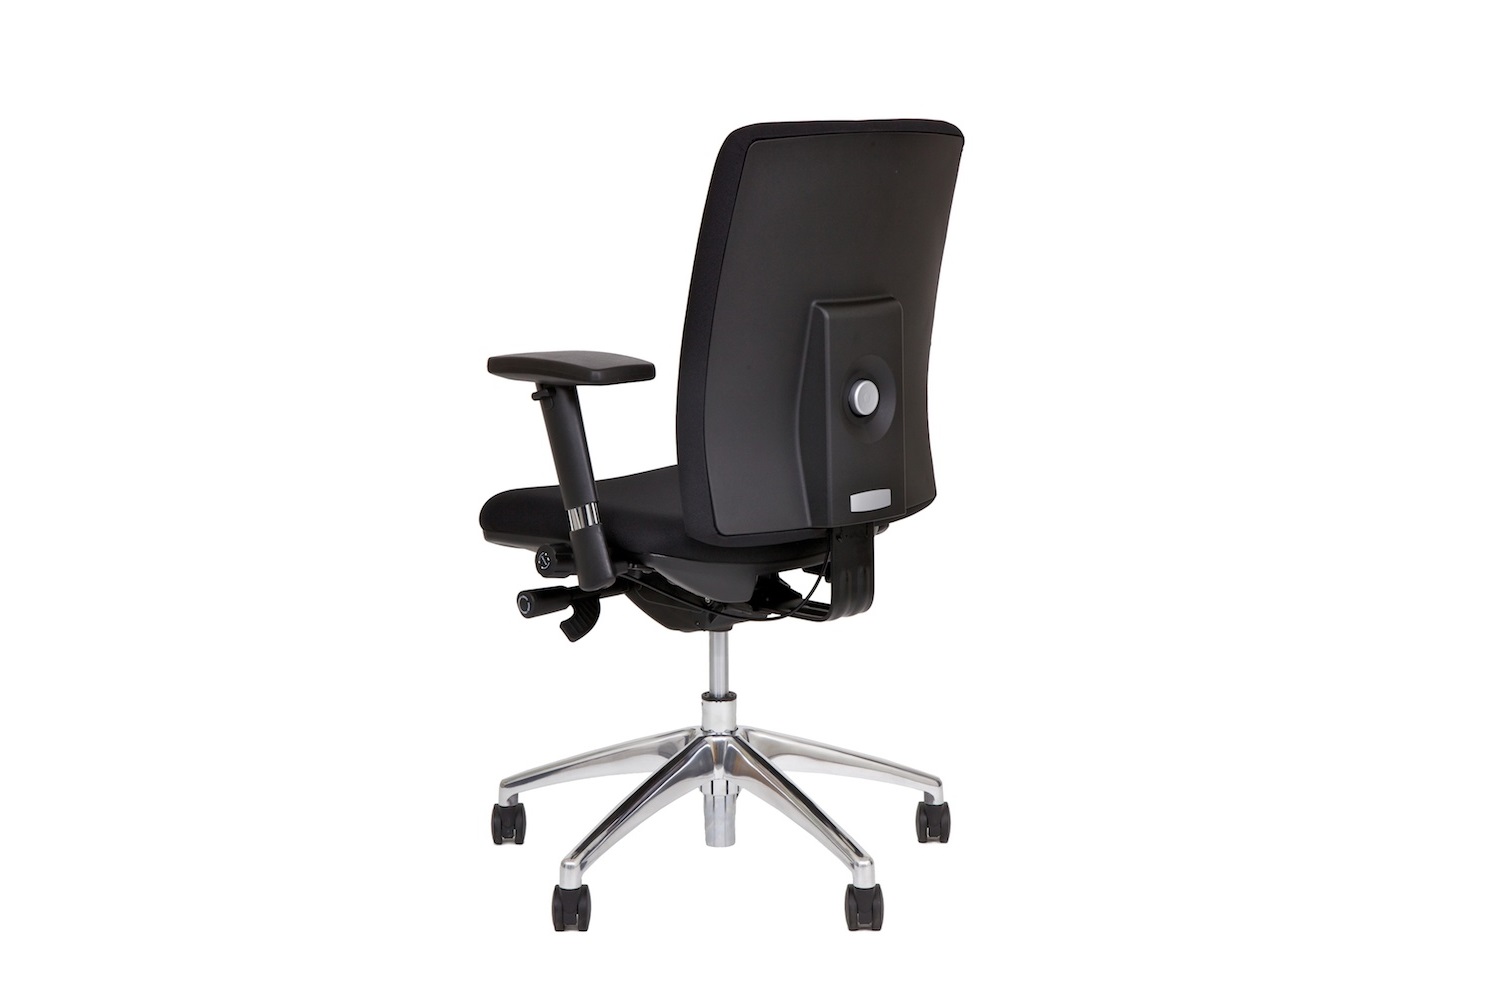 Office chair ergonomic